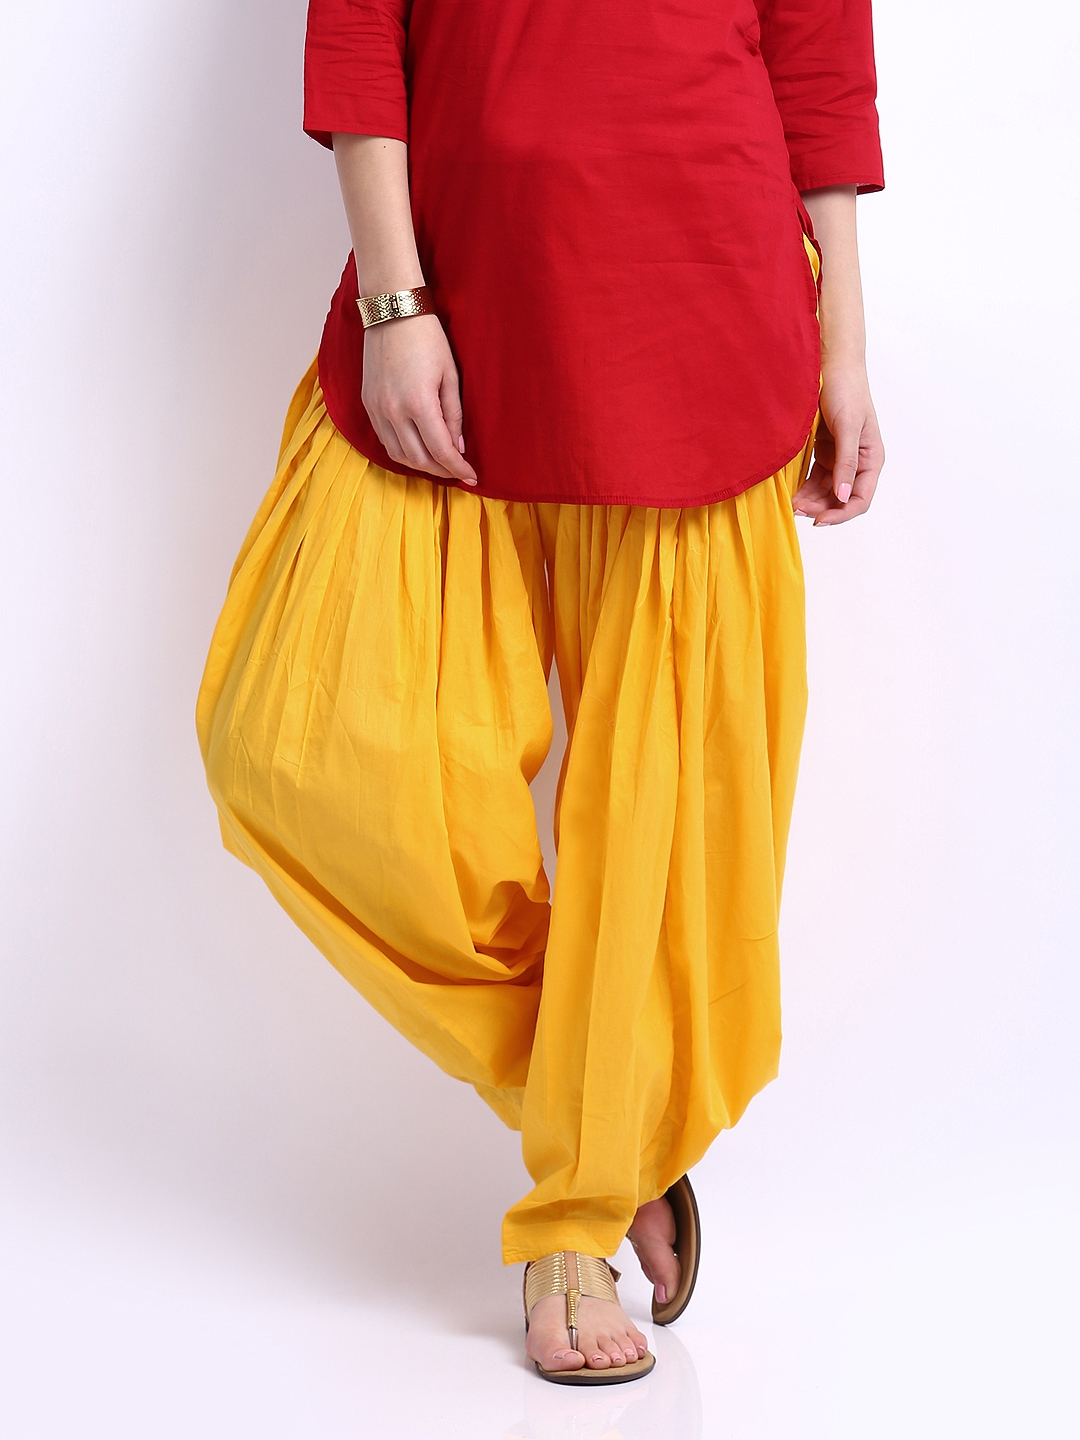 Lohri Special Learn How To Style Your Patiala Salwar  HerZindagi